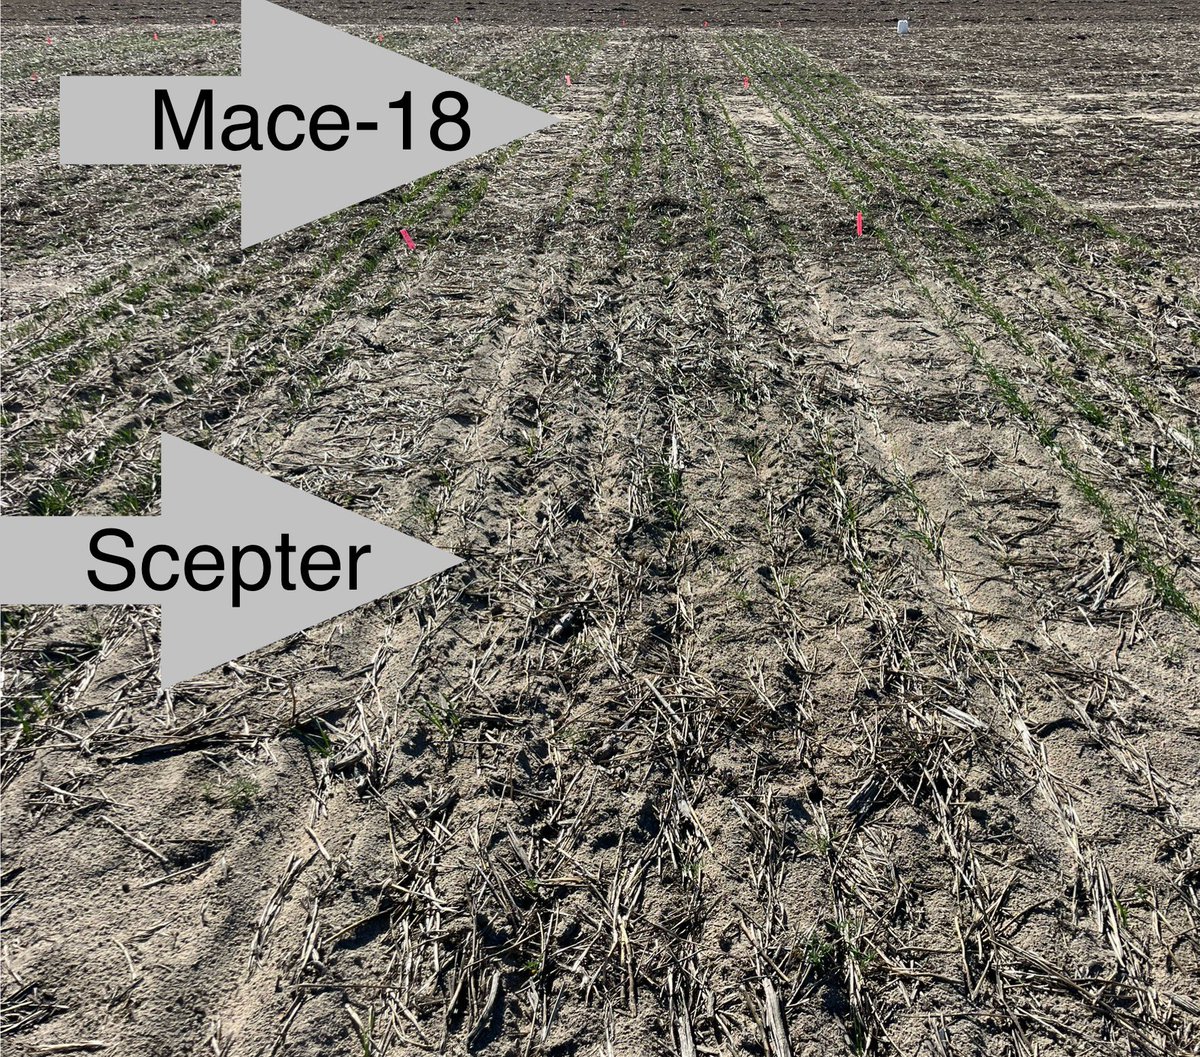 Mid vs long coleoptile rht18 wheat planted at depth, just into moisture on the 10th of April at 11cm
+ 2 cm rain furrow fill 3 weeks later! @theGRDC @CSIRO @rebetzke_0 #longcoleoptilewheat